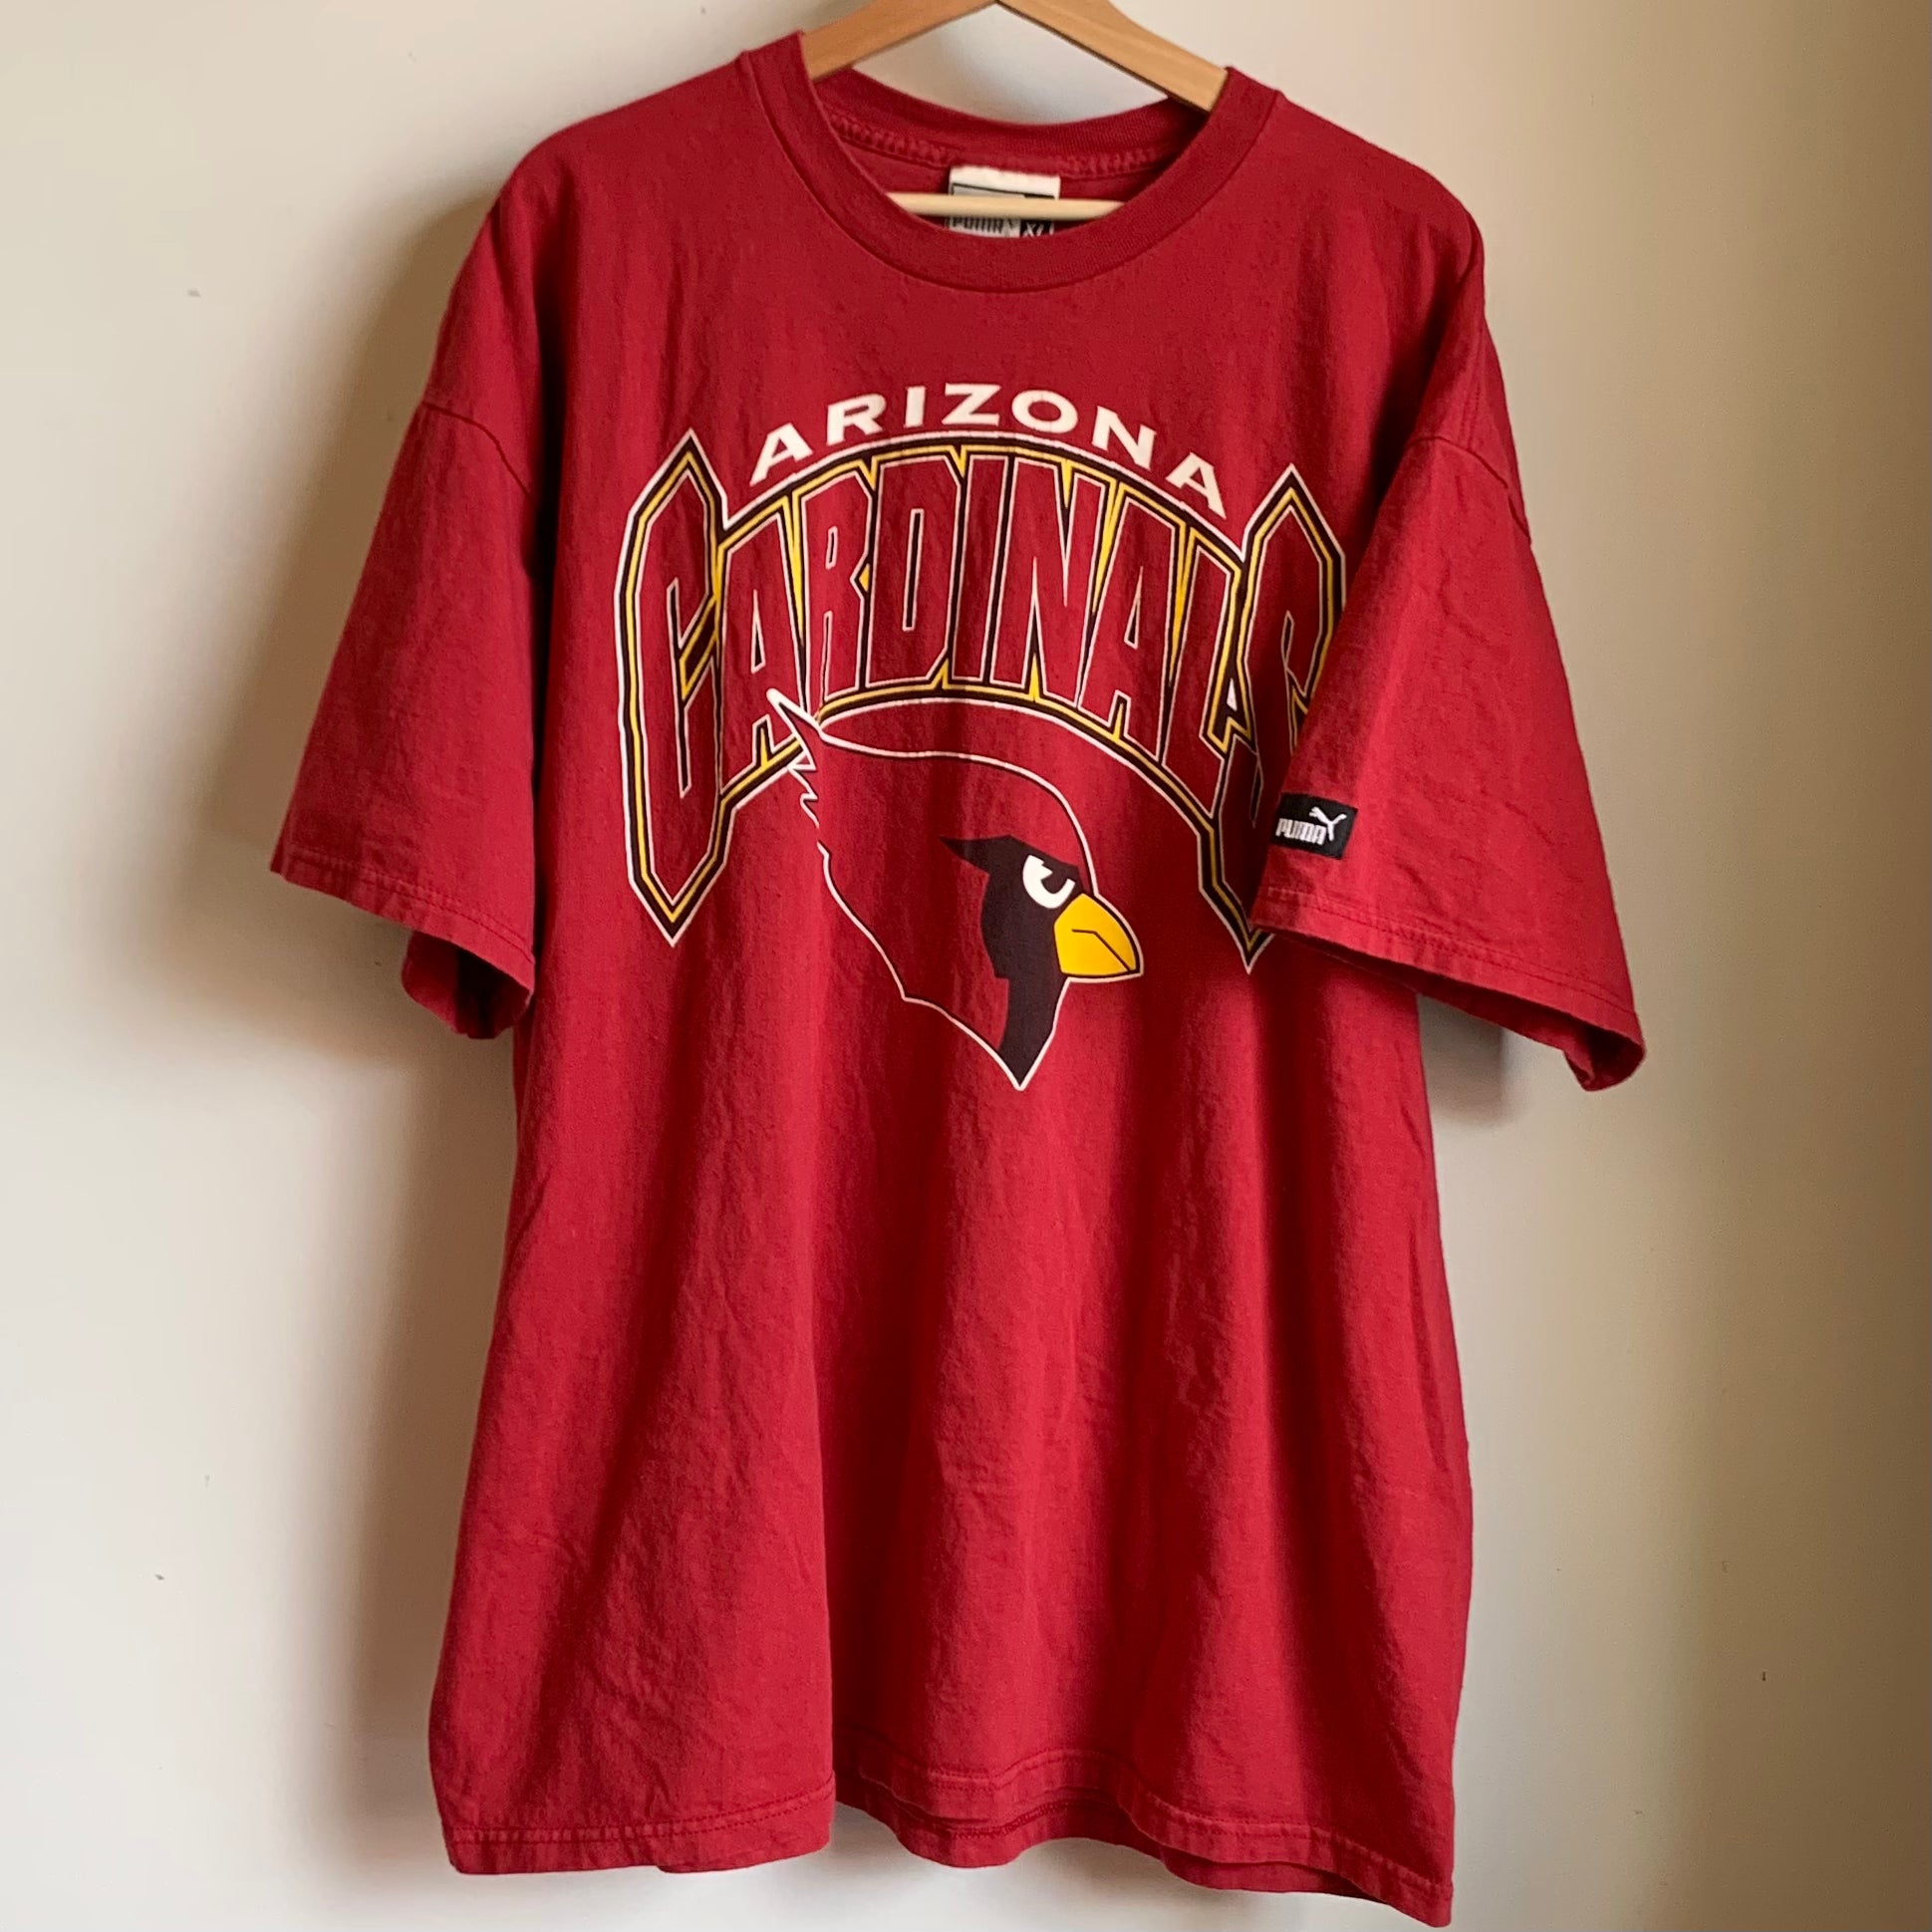 Vintage Phoenix Cardinals Shirt Vintage Cardinals Shirt Vintage